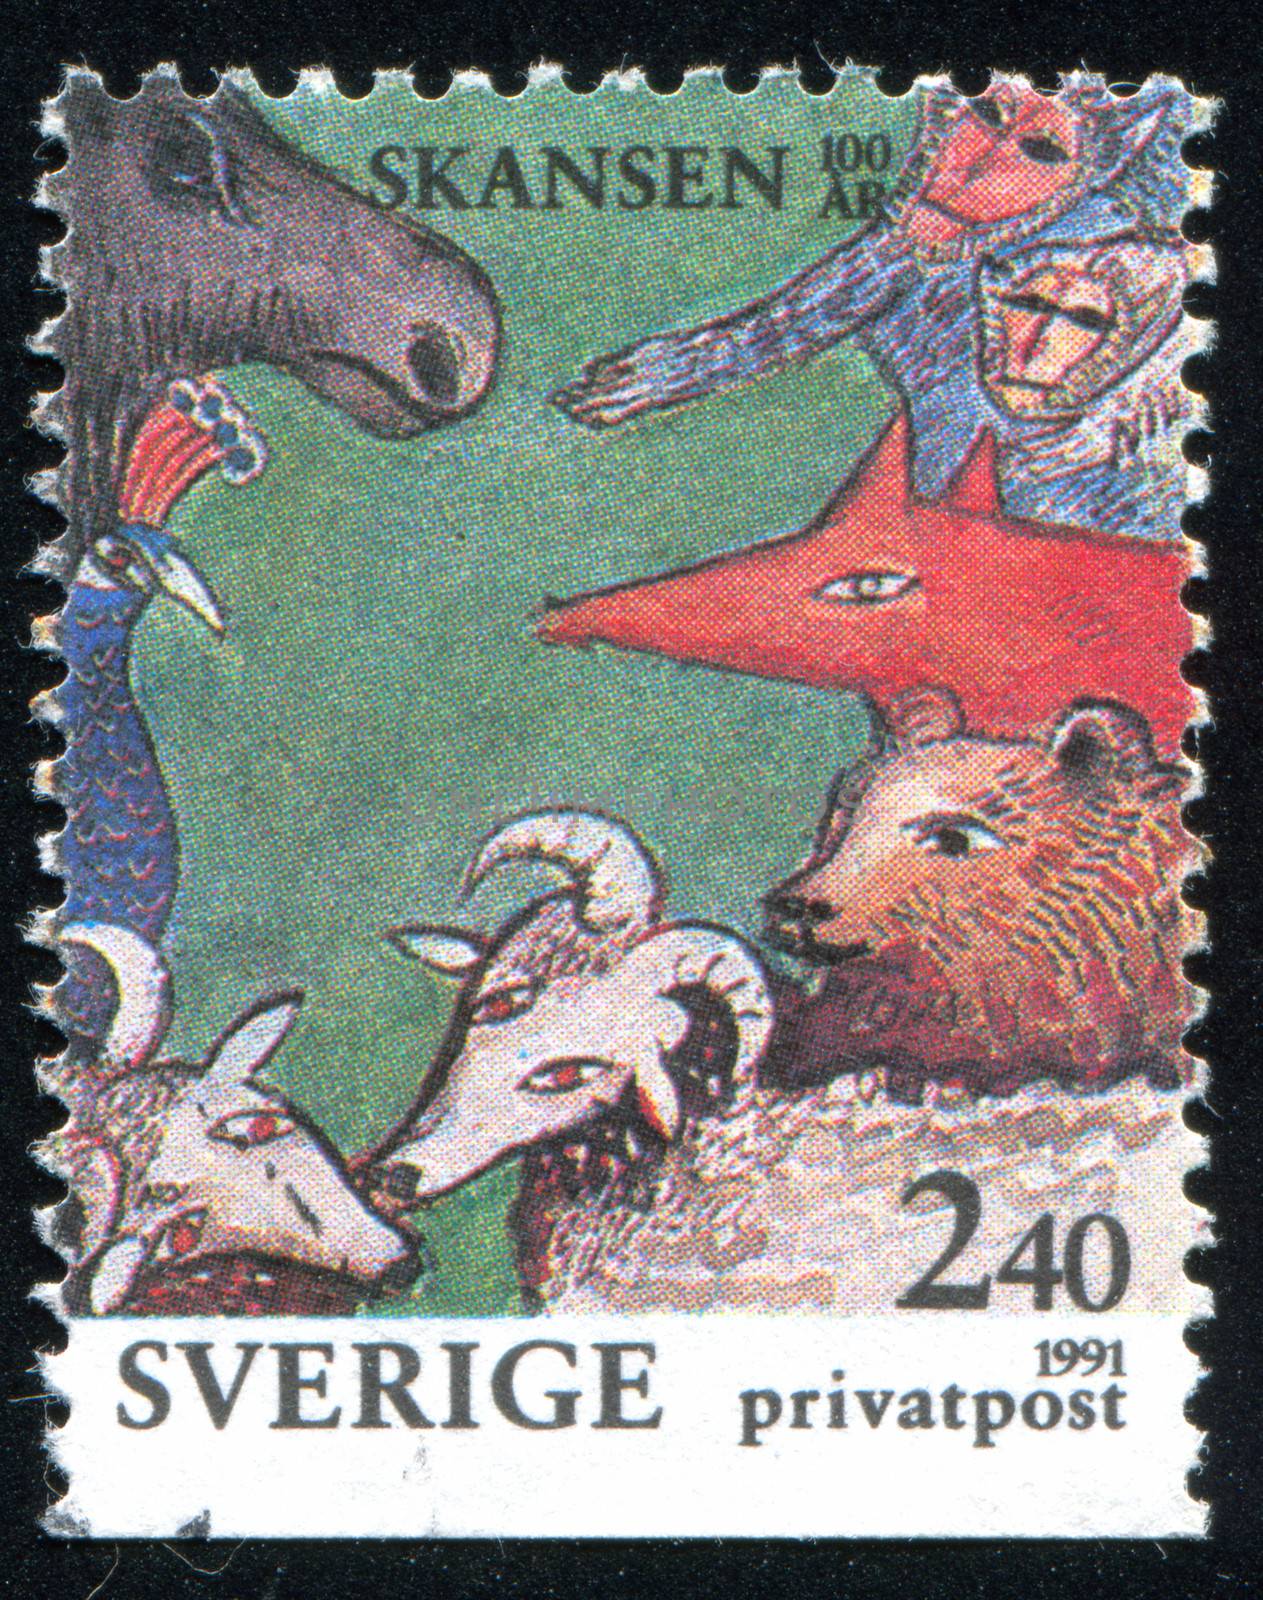 SWEDEN - CIRCA 1991: stamp printed by Sweden, shows Animals, circa 1991